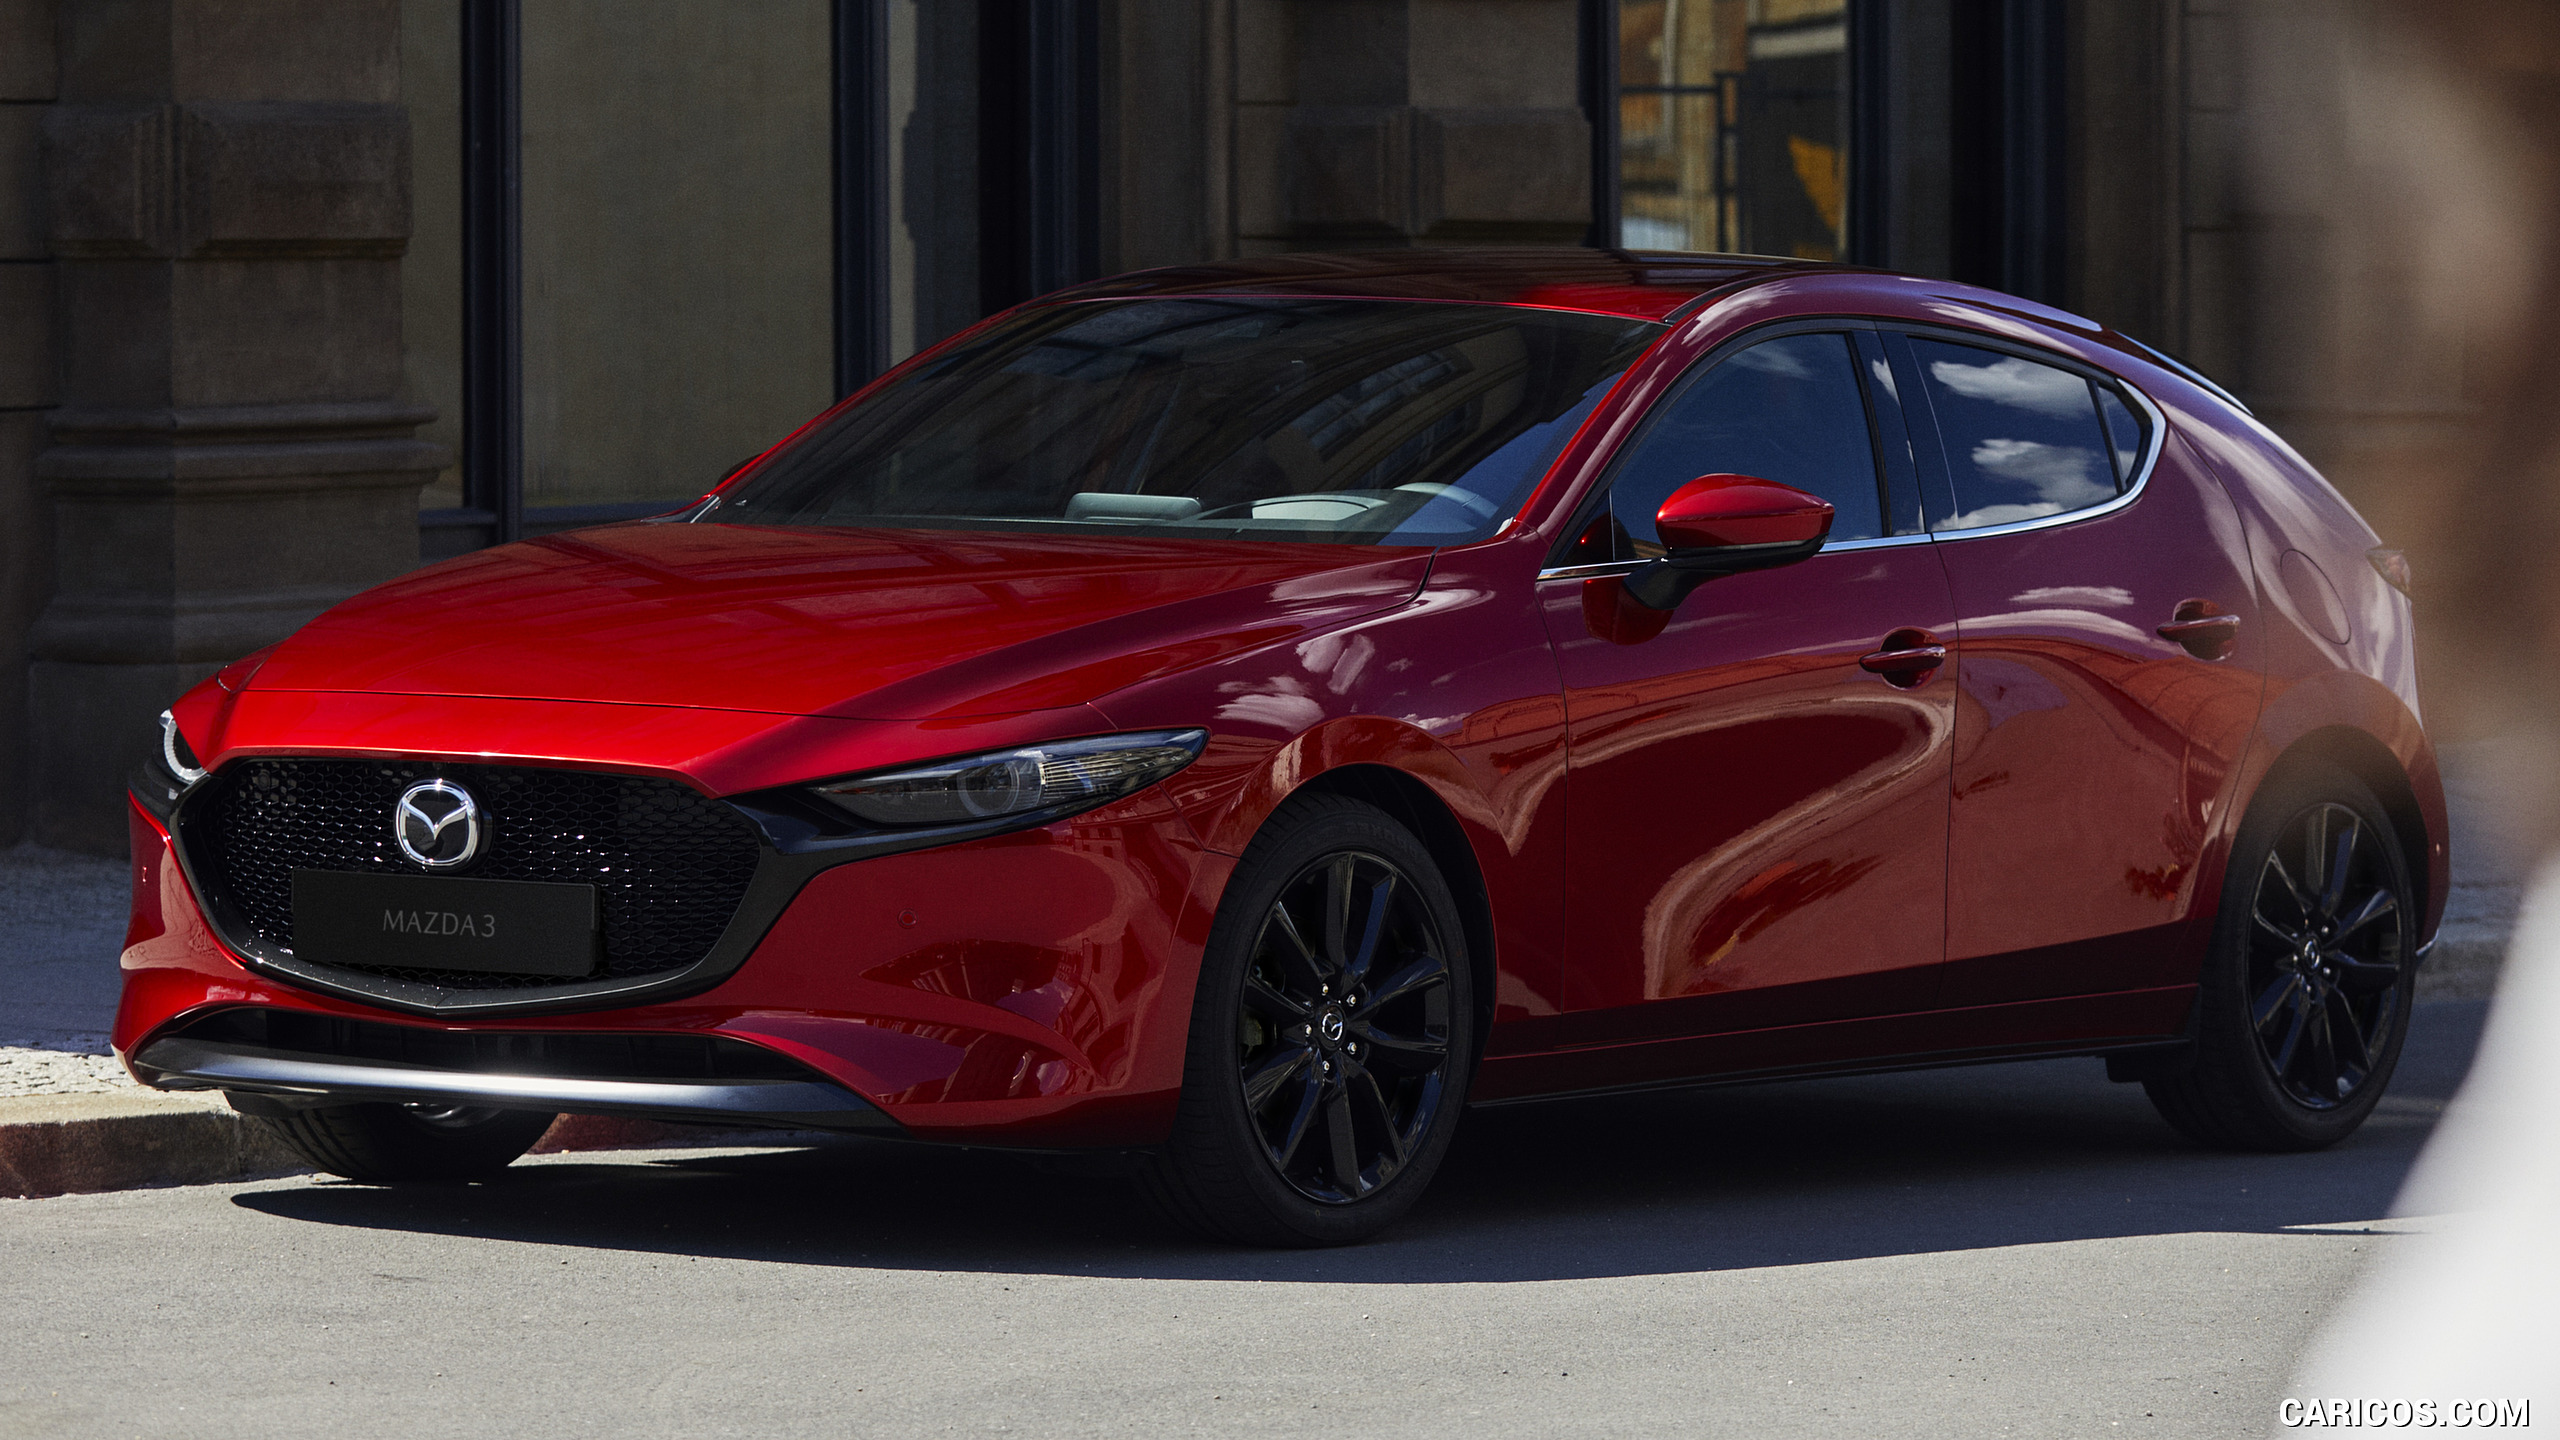 2019 Mazda3 Hatchback - Front Three-Quarter, #1 of 44